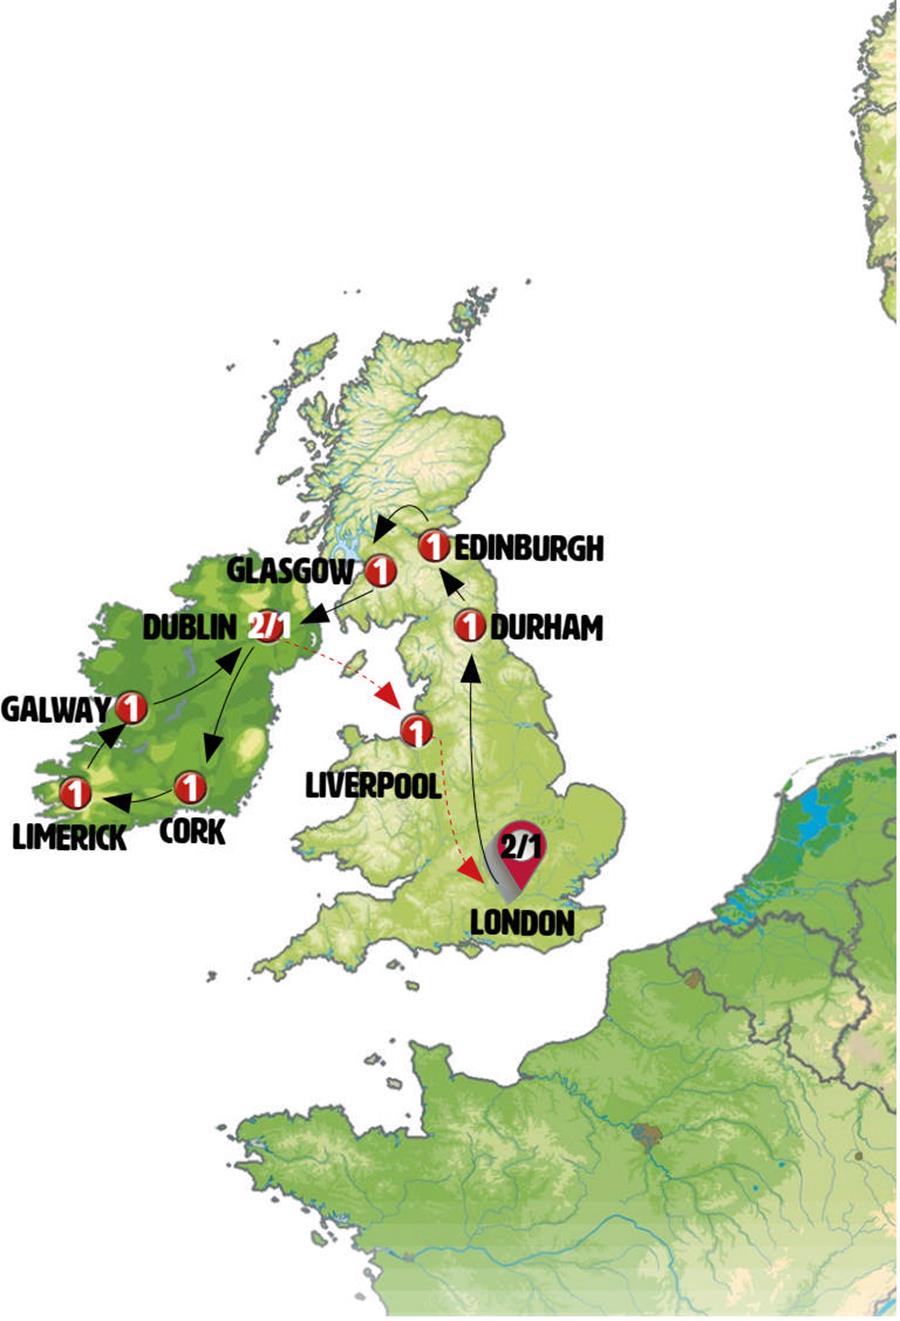 tourhub | Europamundo | England, Scotland and Ireland end Dublin | Tour Map